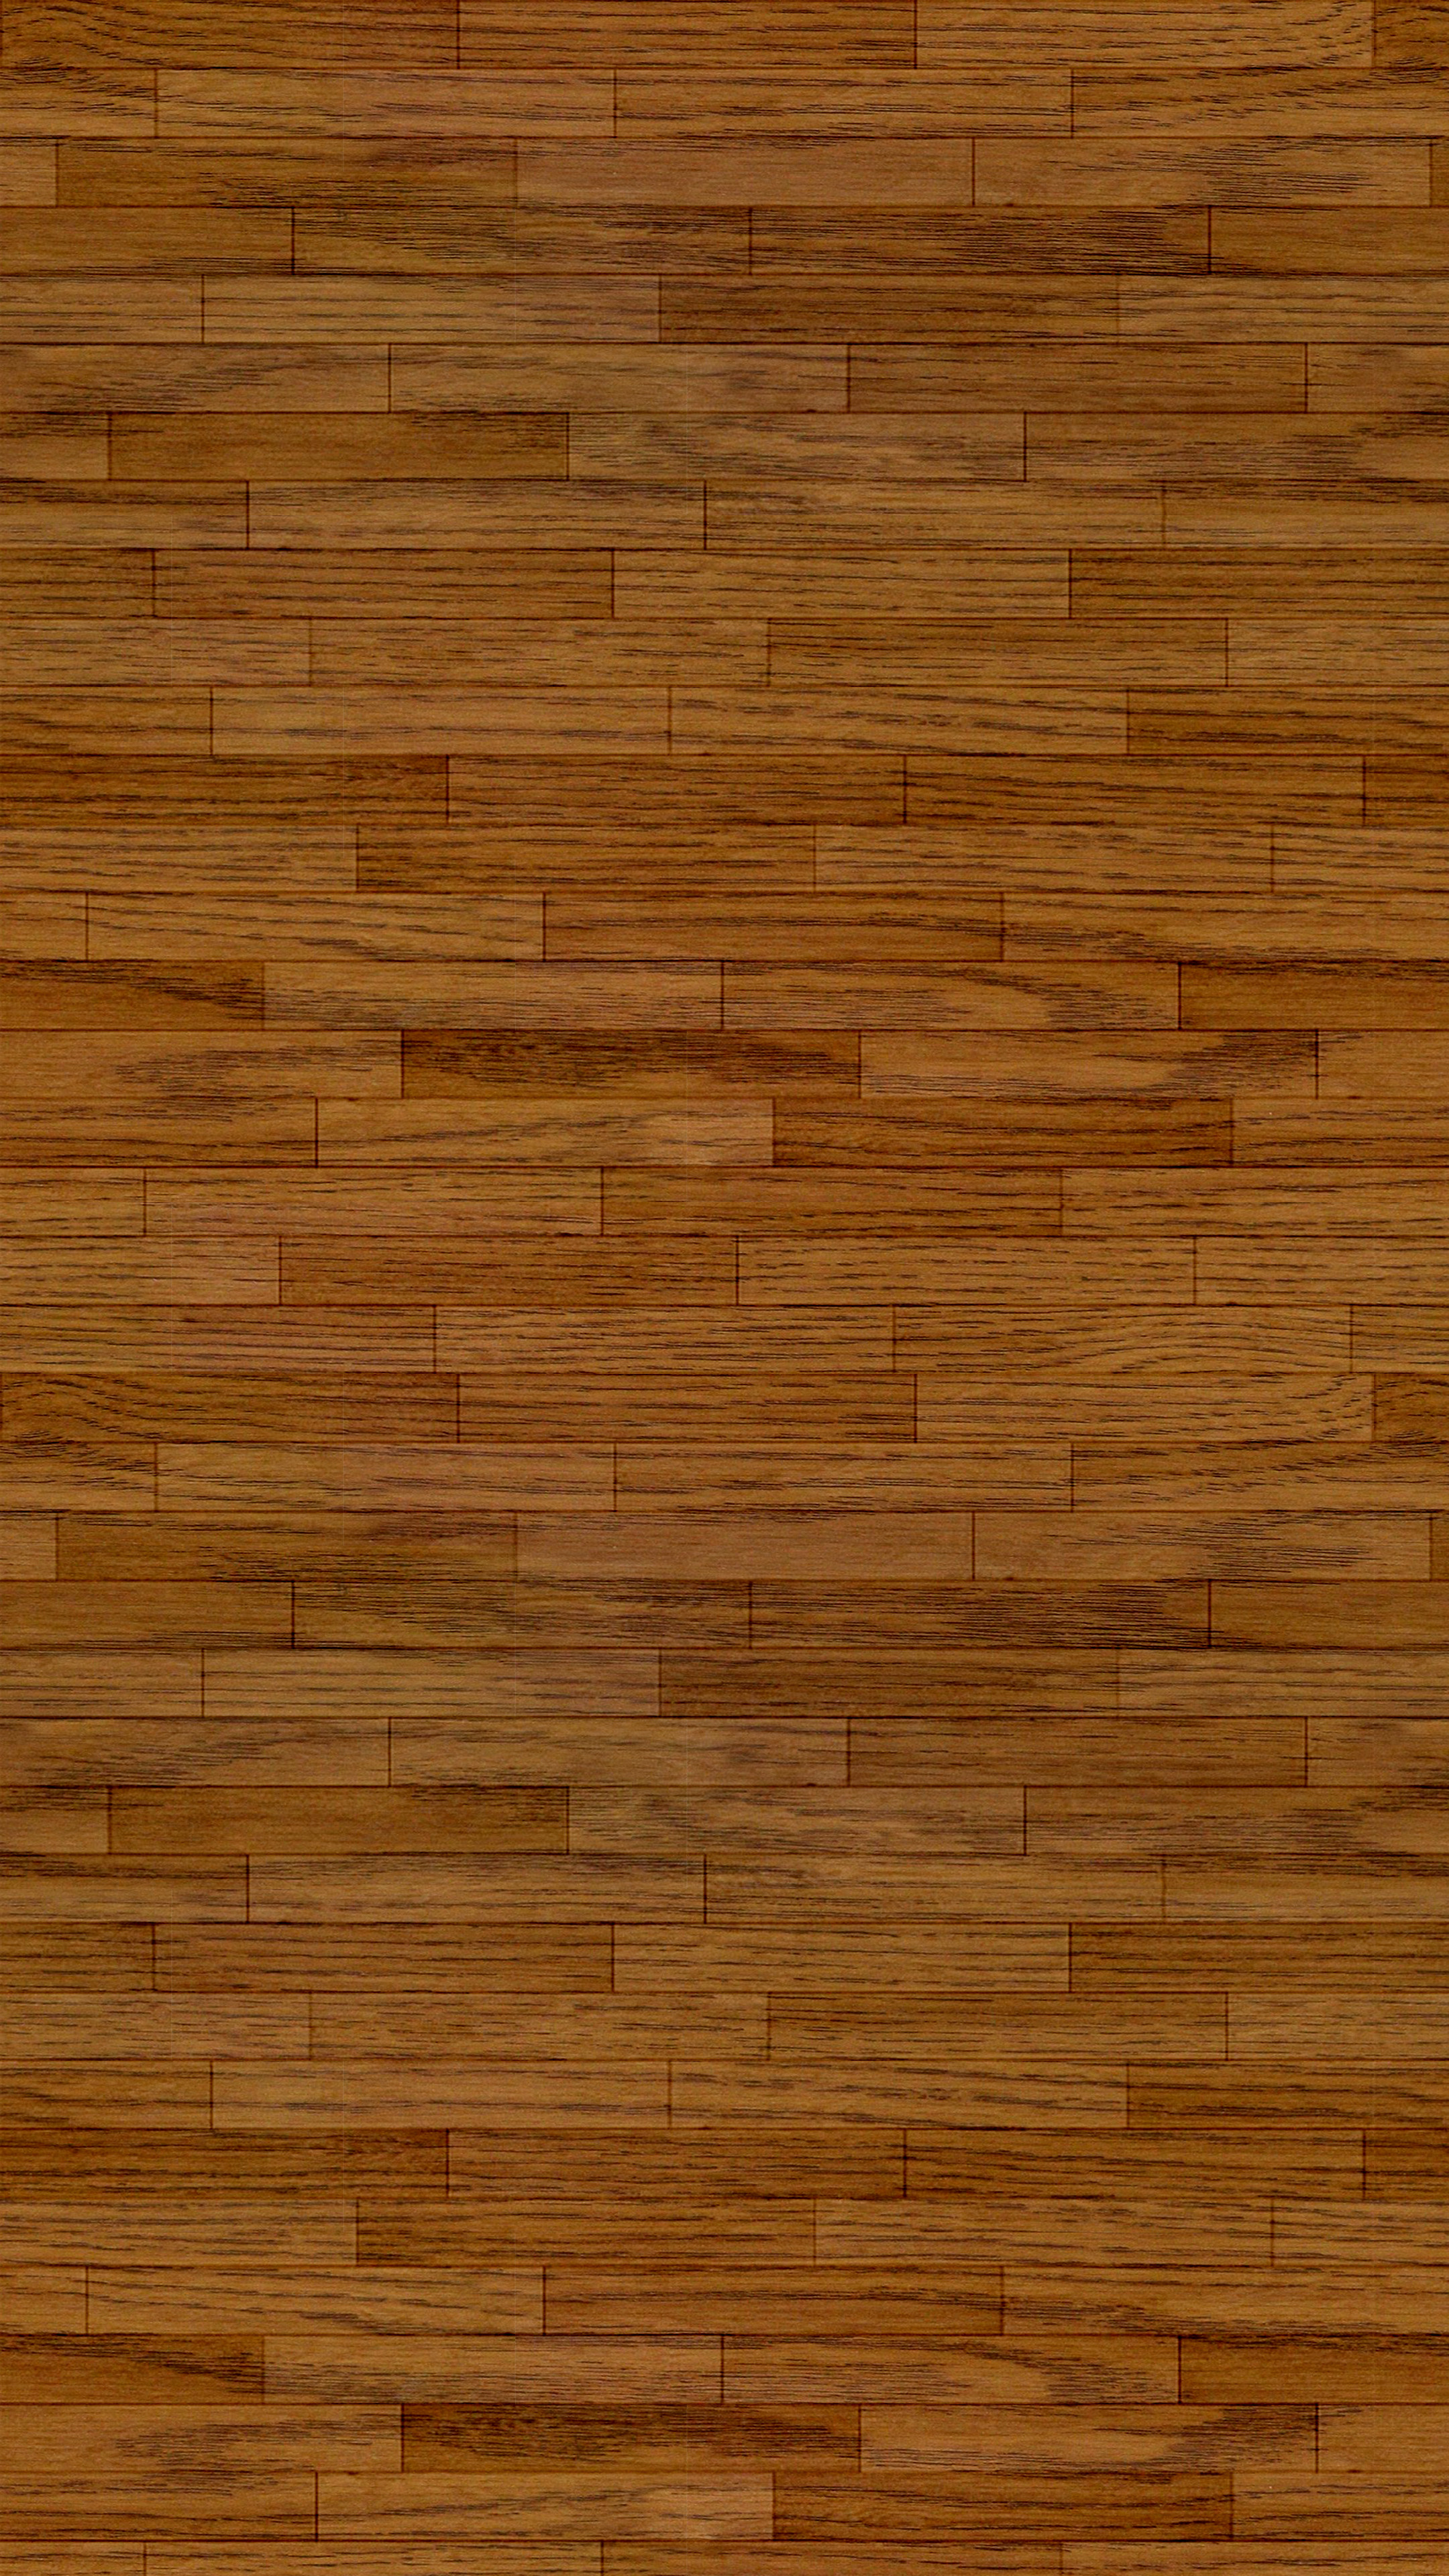 Hardwood floor pattern, Dark wood elegance, Timeless beauty, Natural authenticity, 2160x3840 4K Phone